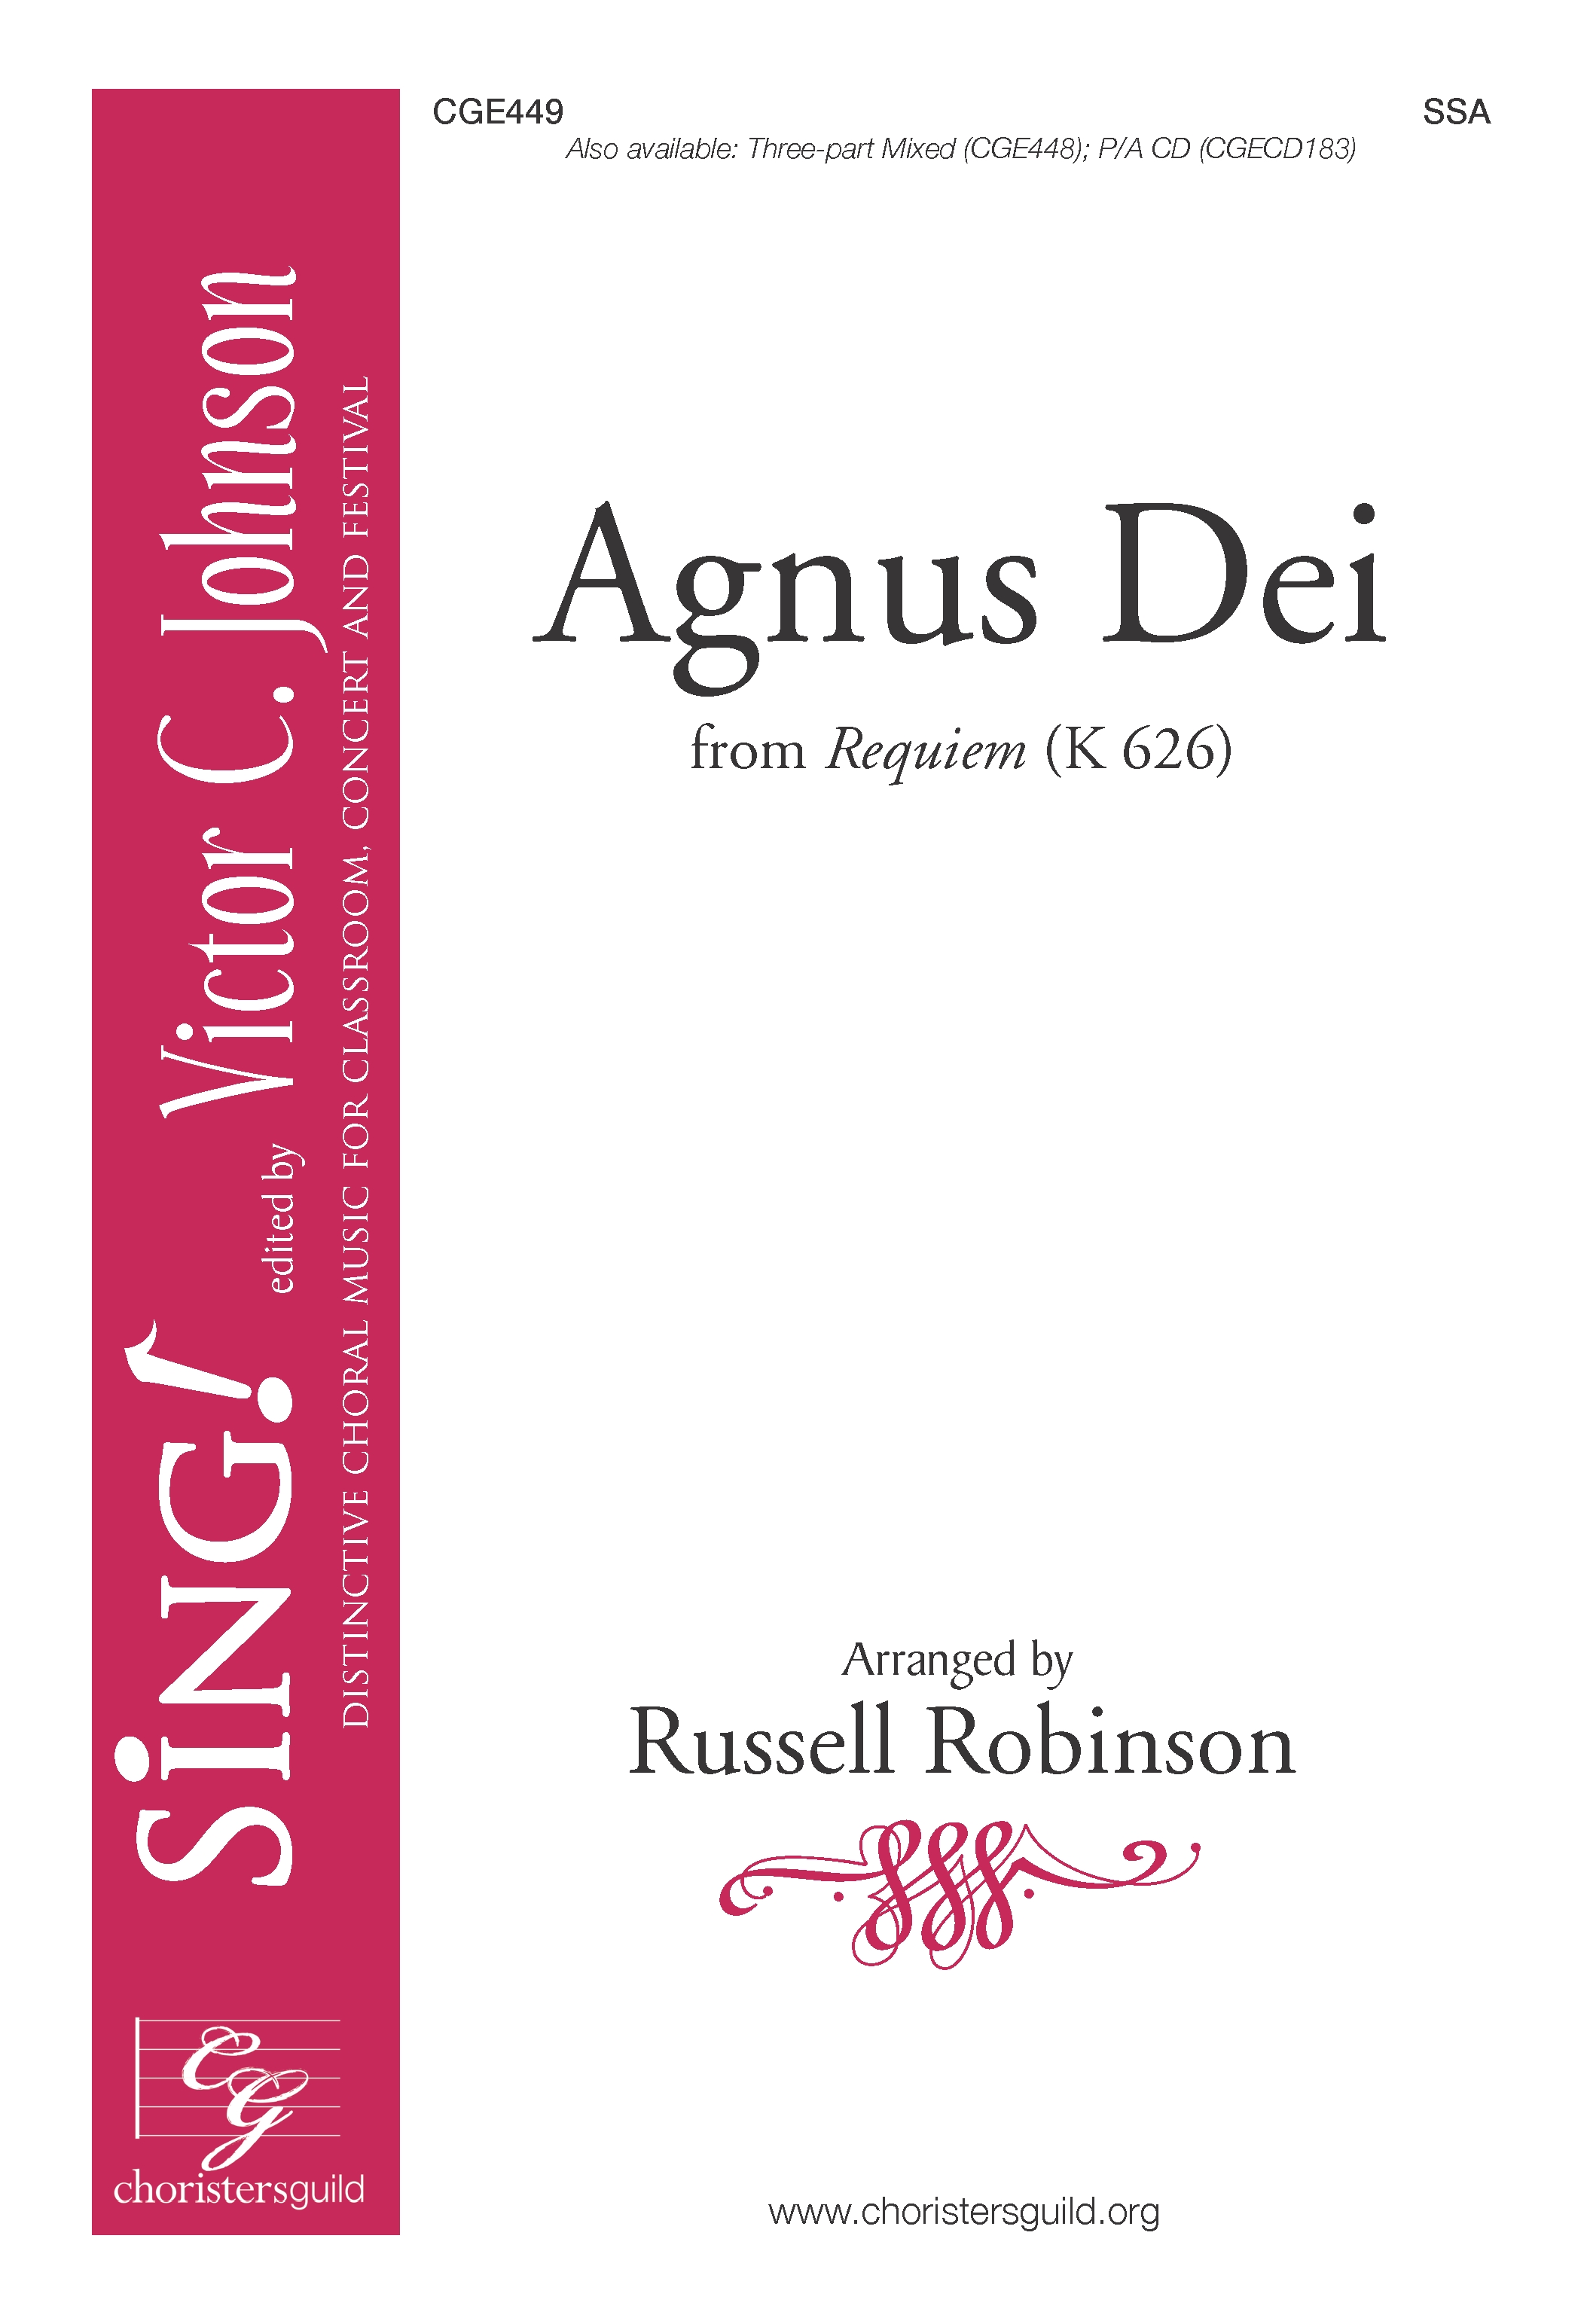 Agnus Dei (from Requiem K 626) - SSA